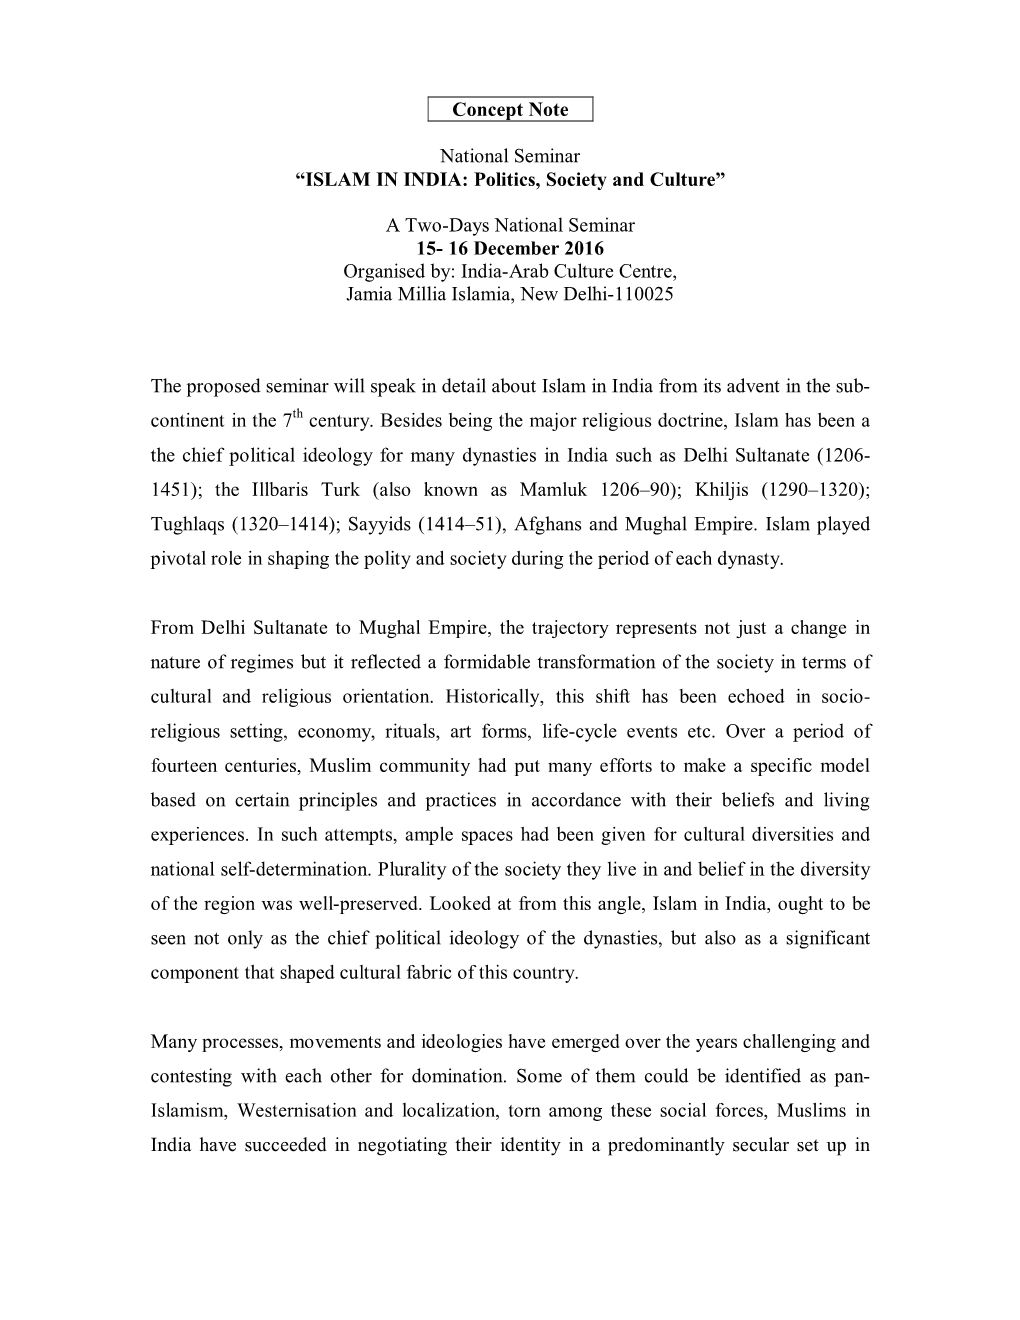 Concept Note National Seminar “ISLAM in INDIA: Politics, Society